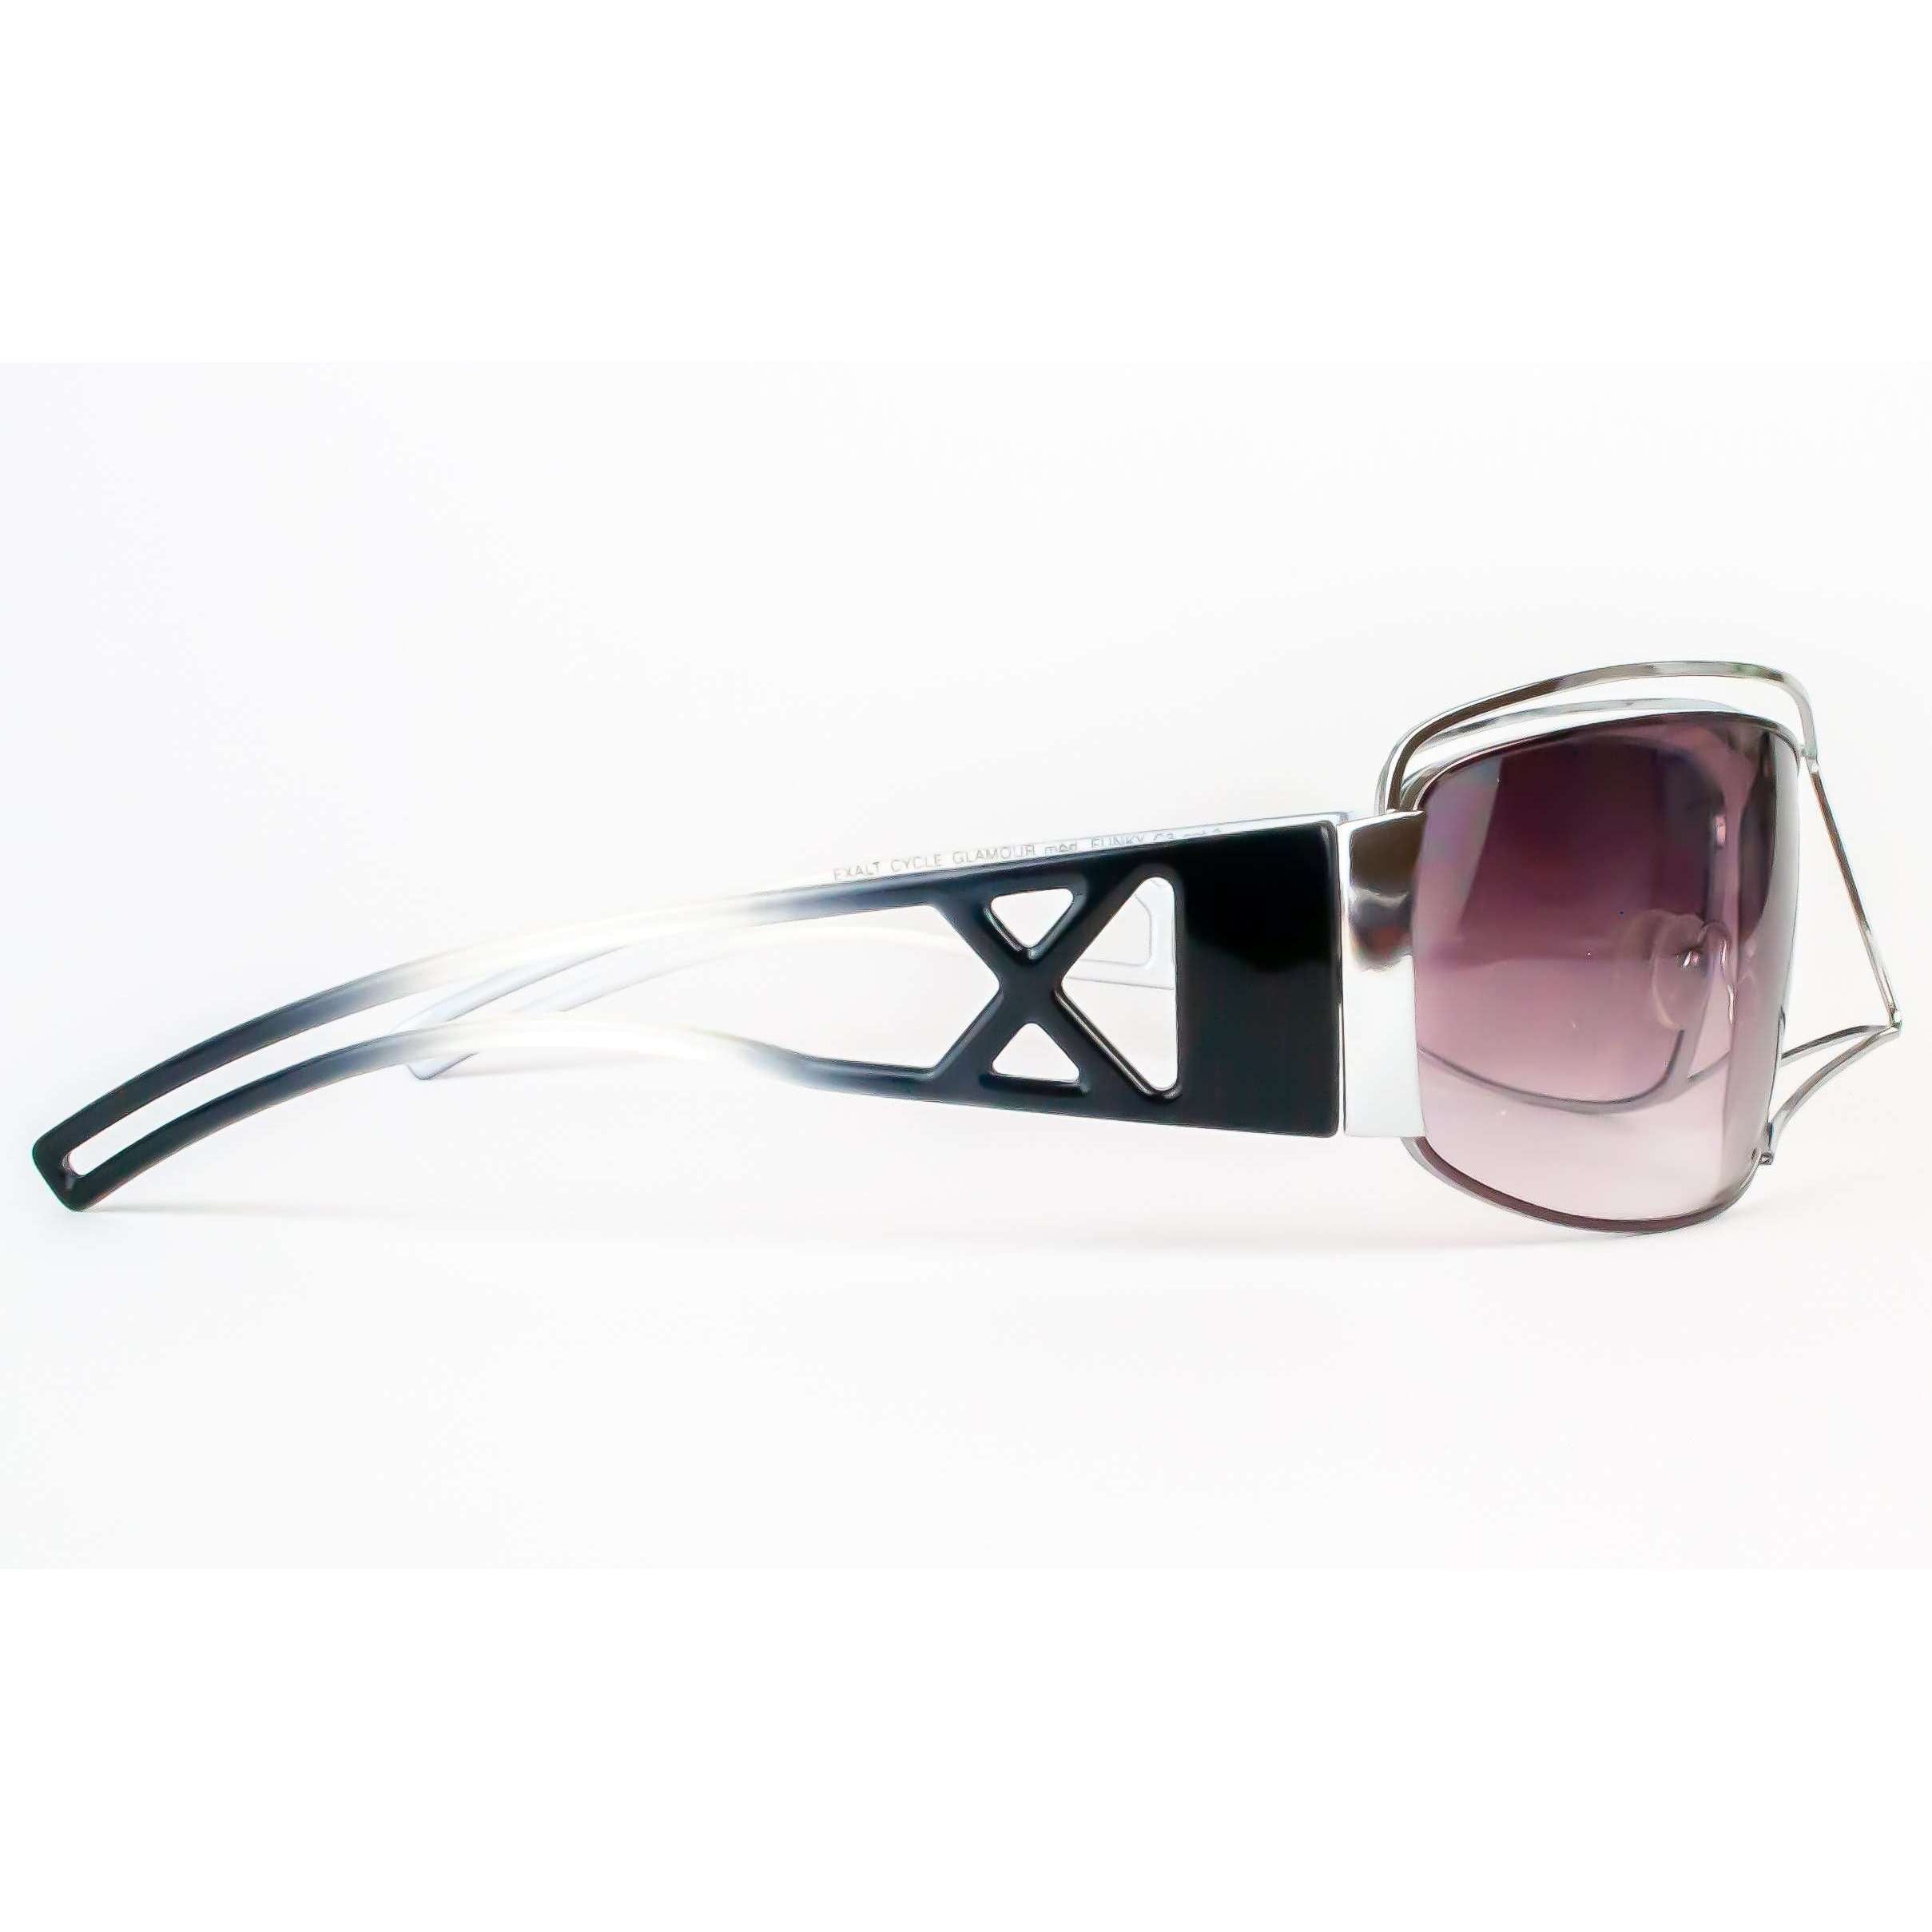 Exalt Vidi Vici Model - Glamour Funky Oversized Pink Sunglasses